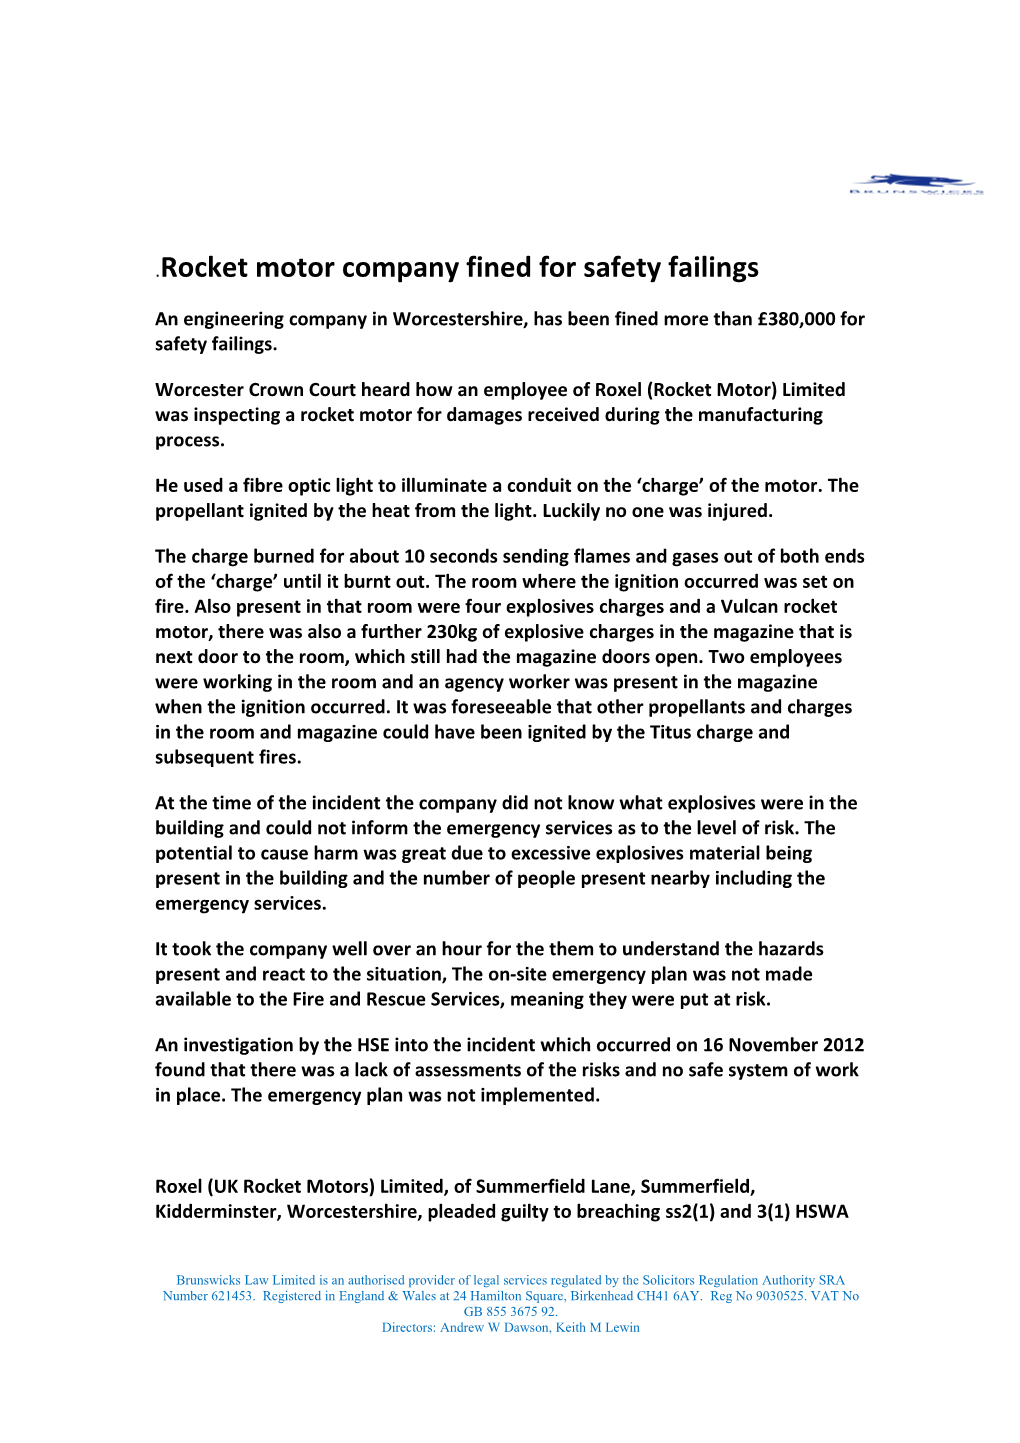 Rocket Motor Company Fined for Safety Failings